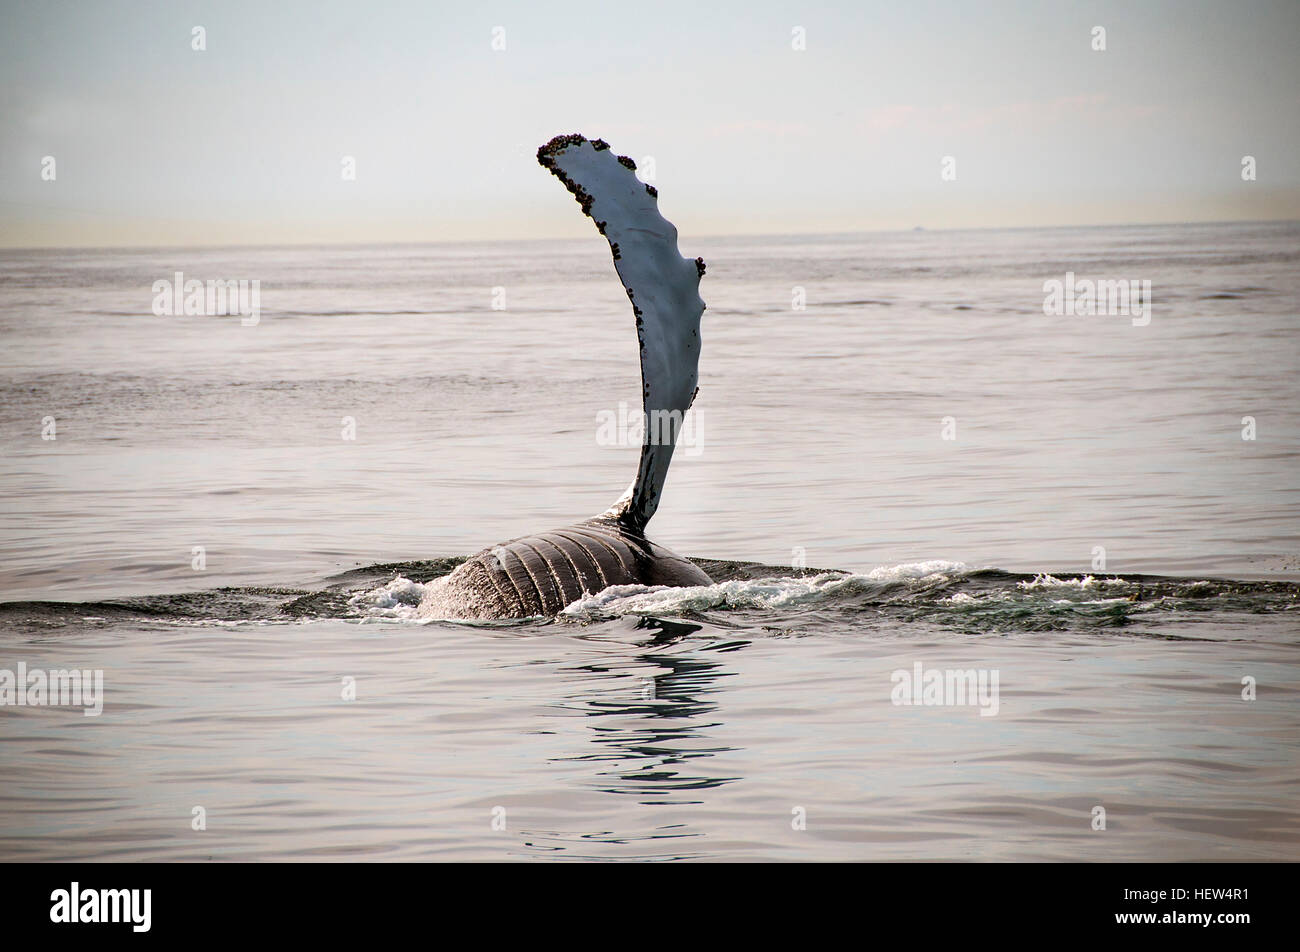 Humpback whale flipper on water surface, Provincetown, Massachusetts, USA Stock Photo